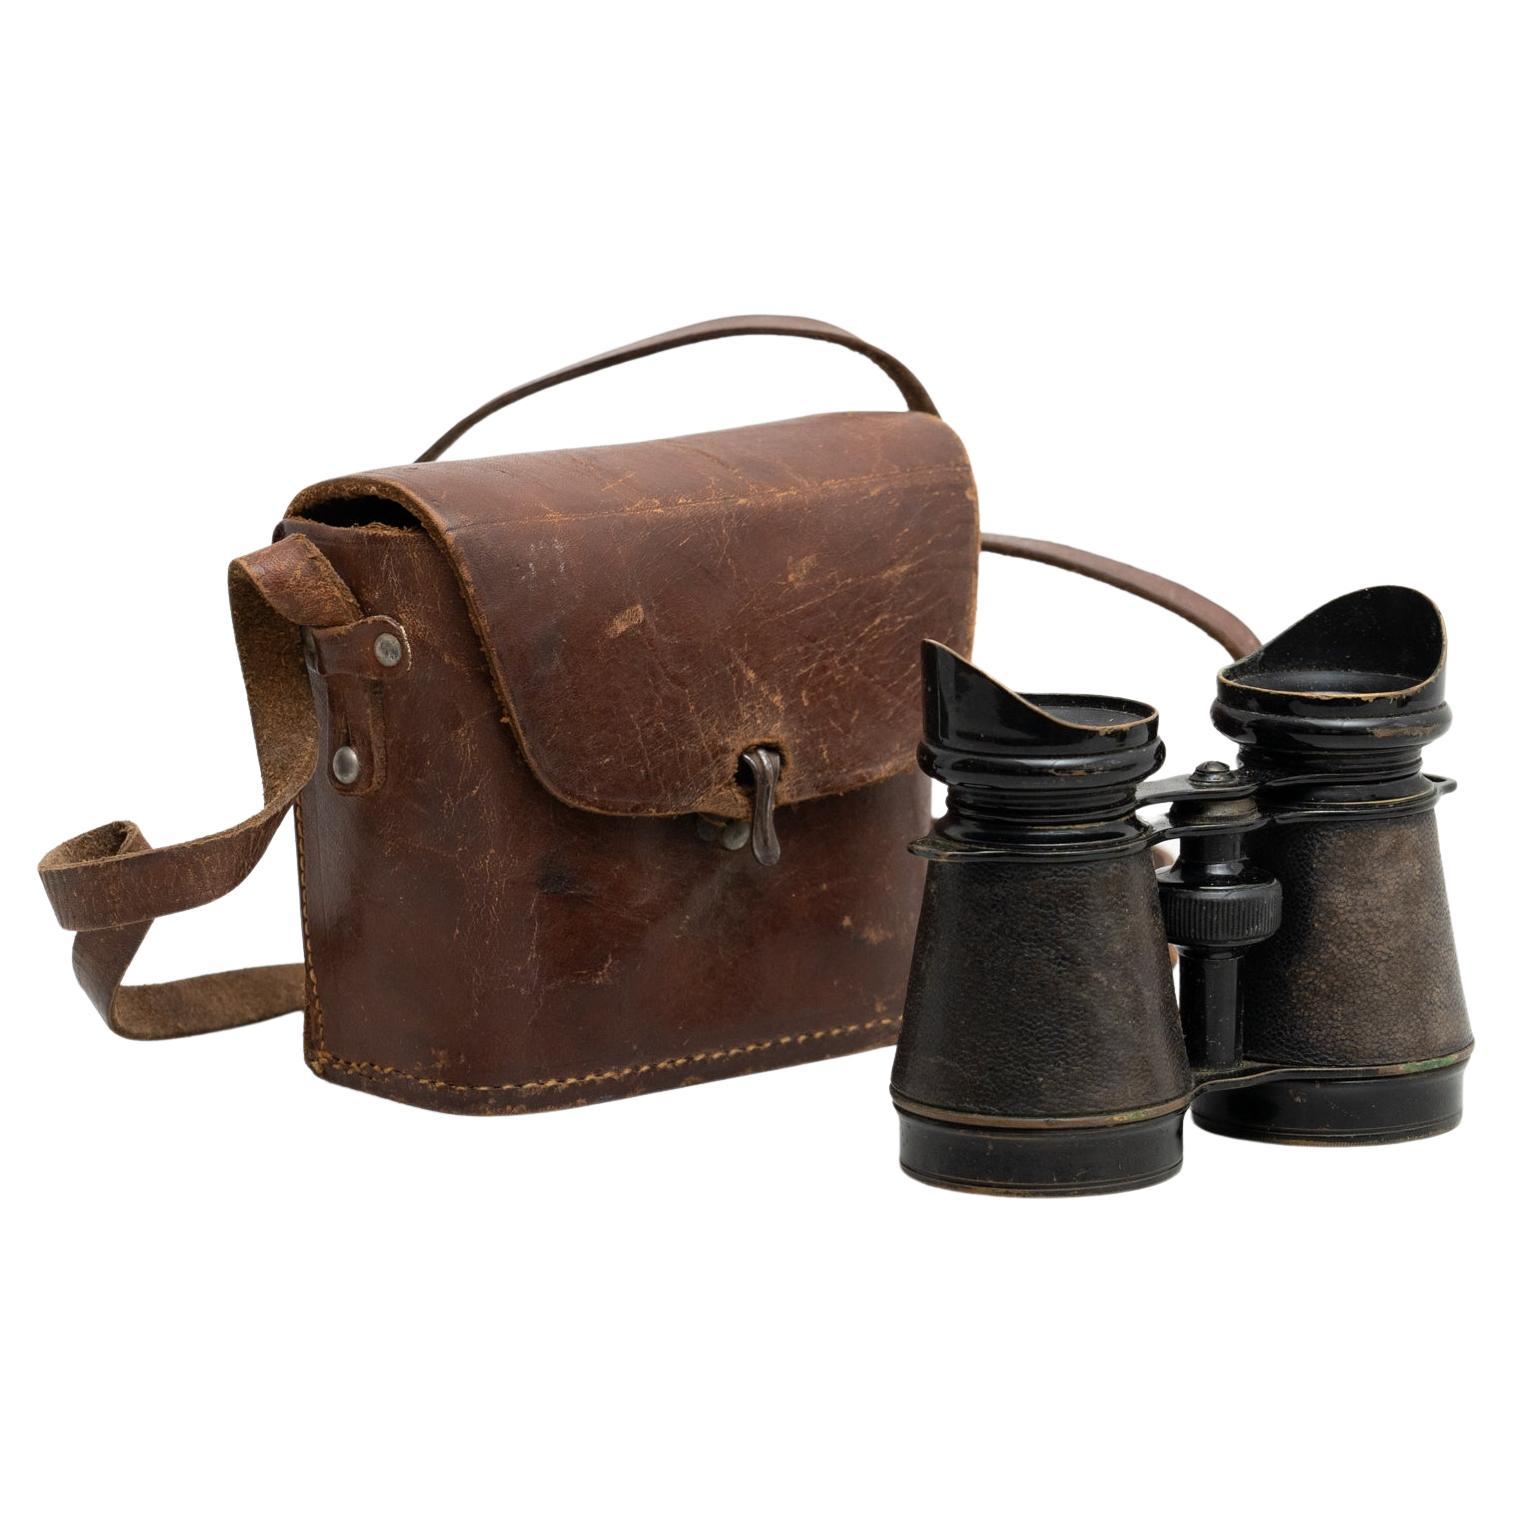 Antique Vintage Binoculars on a Leather Case, circa 1950